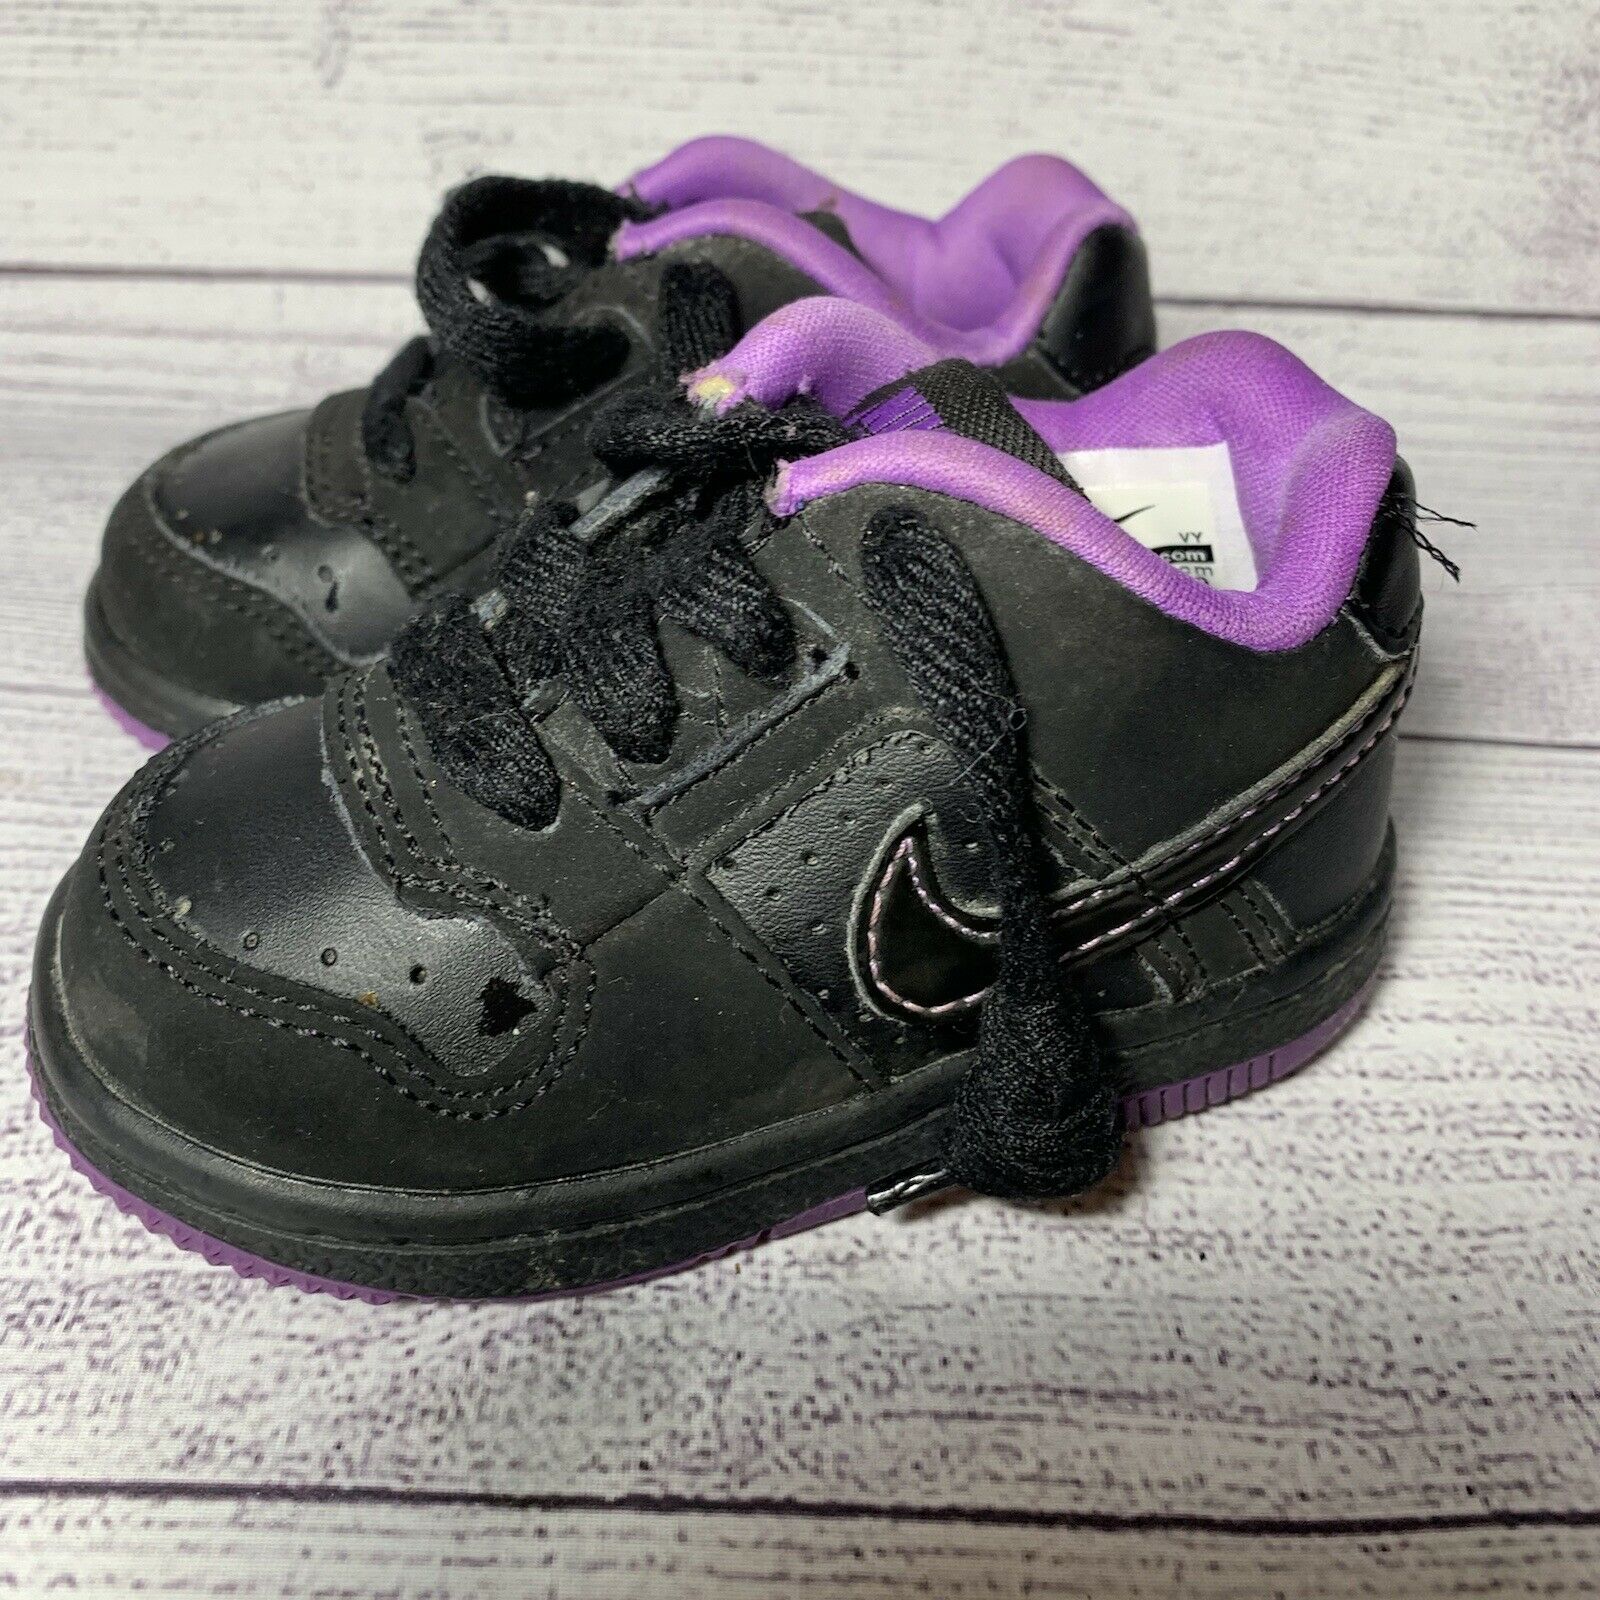 Nike baby girl shoes athletic size 4 c black purple